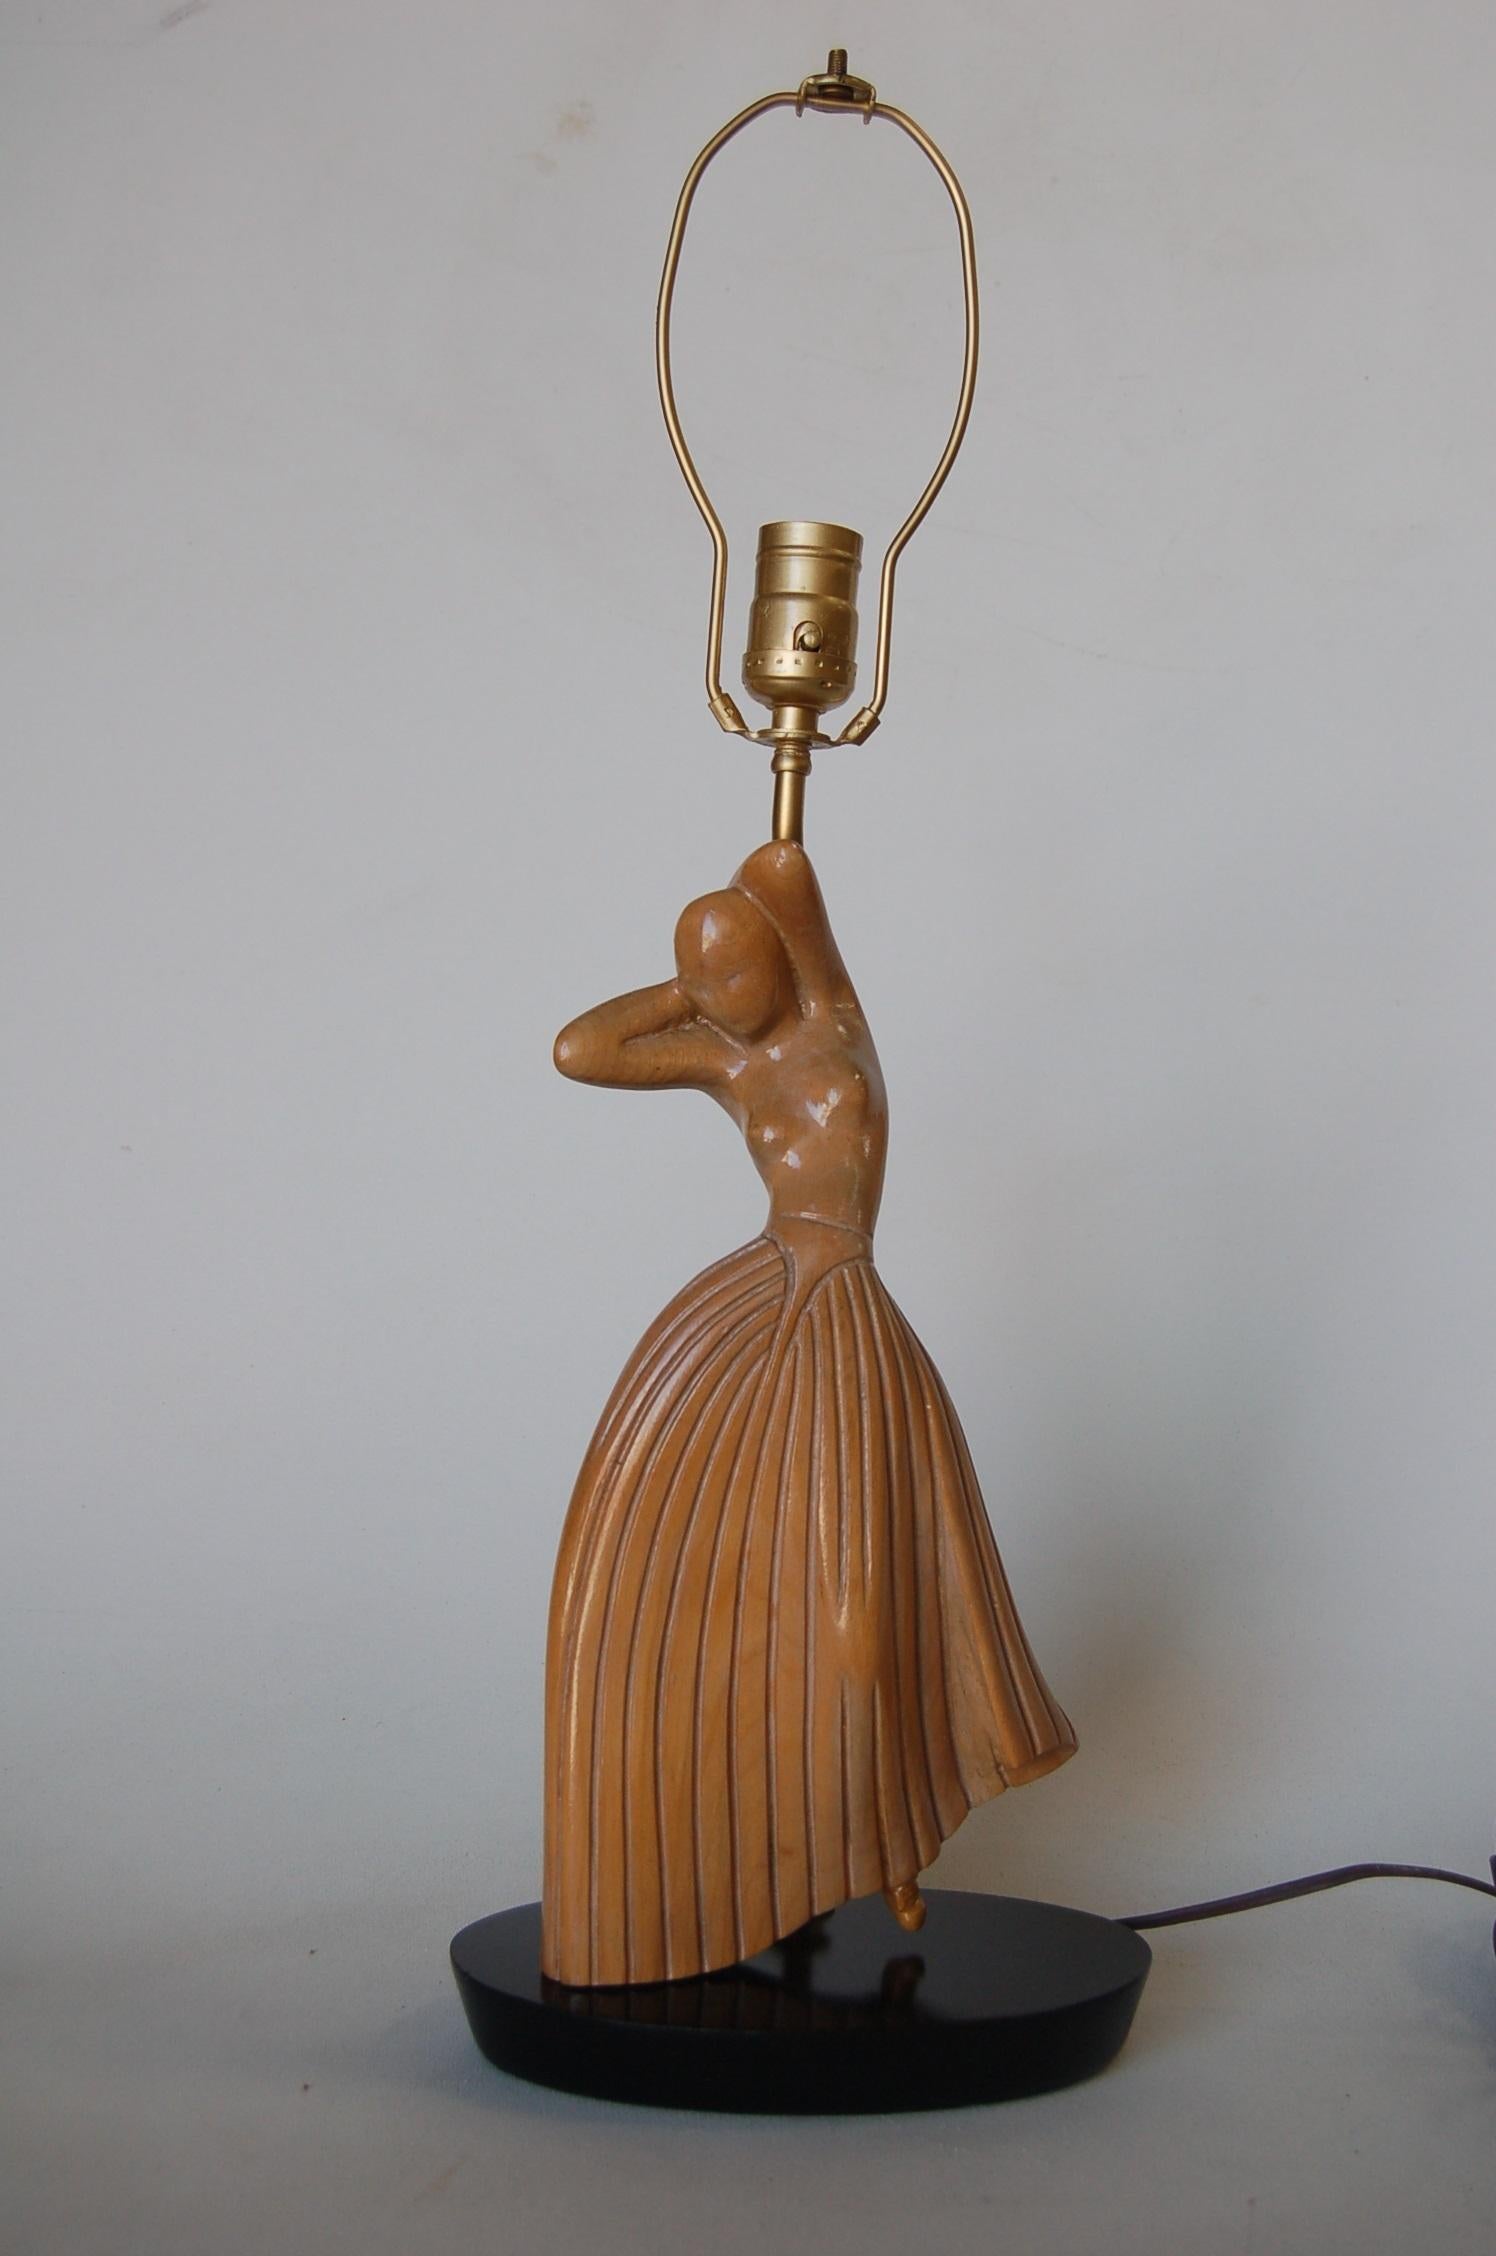 Carved oak female figure dancer table lamp in the style of Jascha Heifetz.

Measures: 18